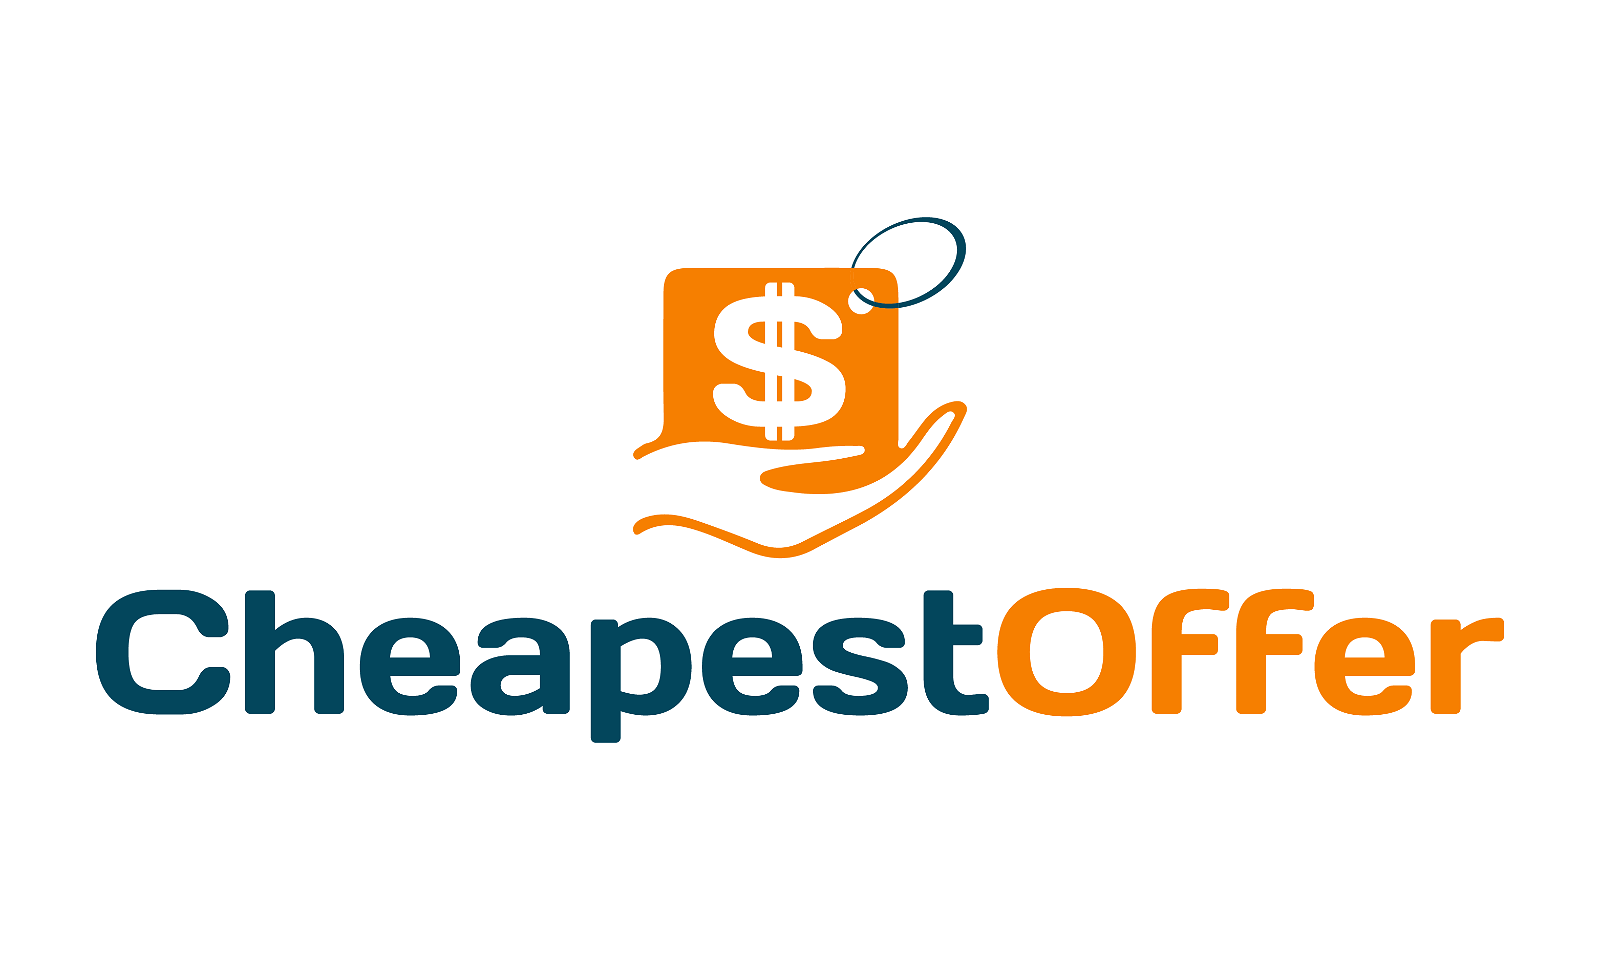 CheapestOffer.com - Creative brandable domain for sale